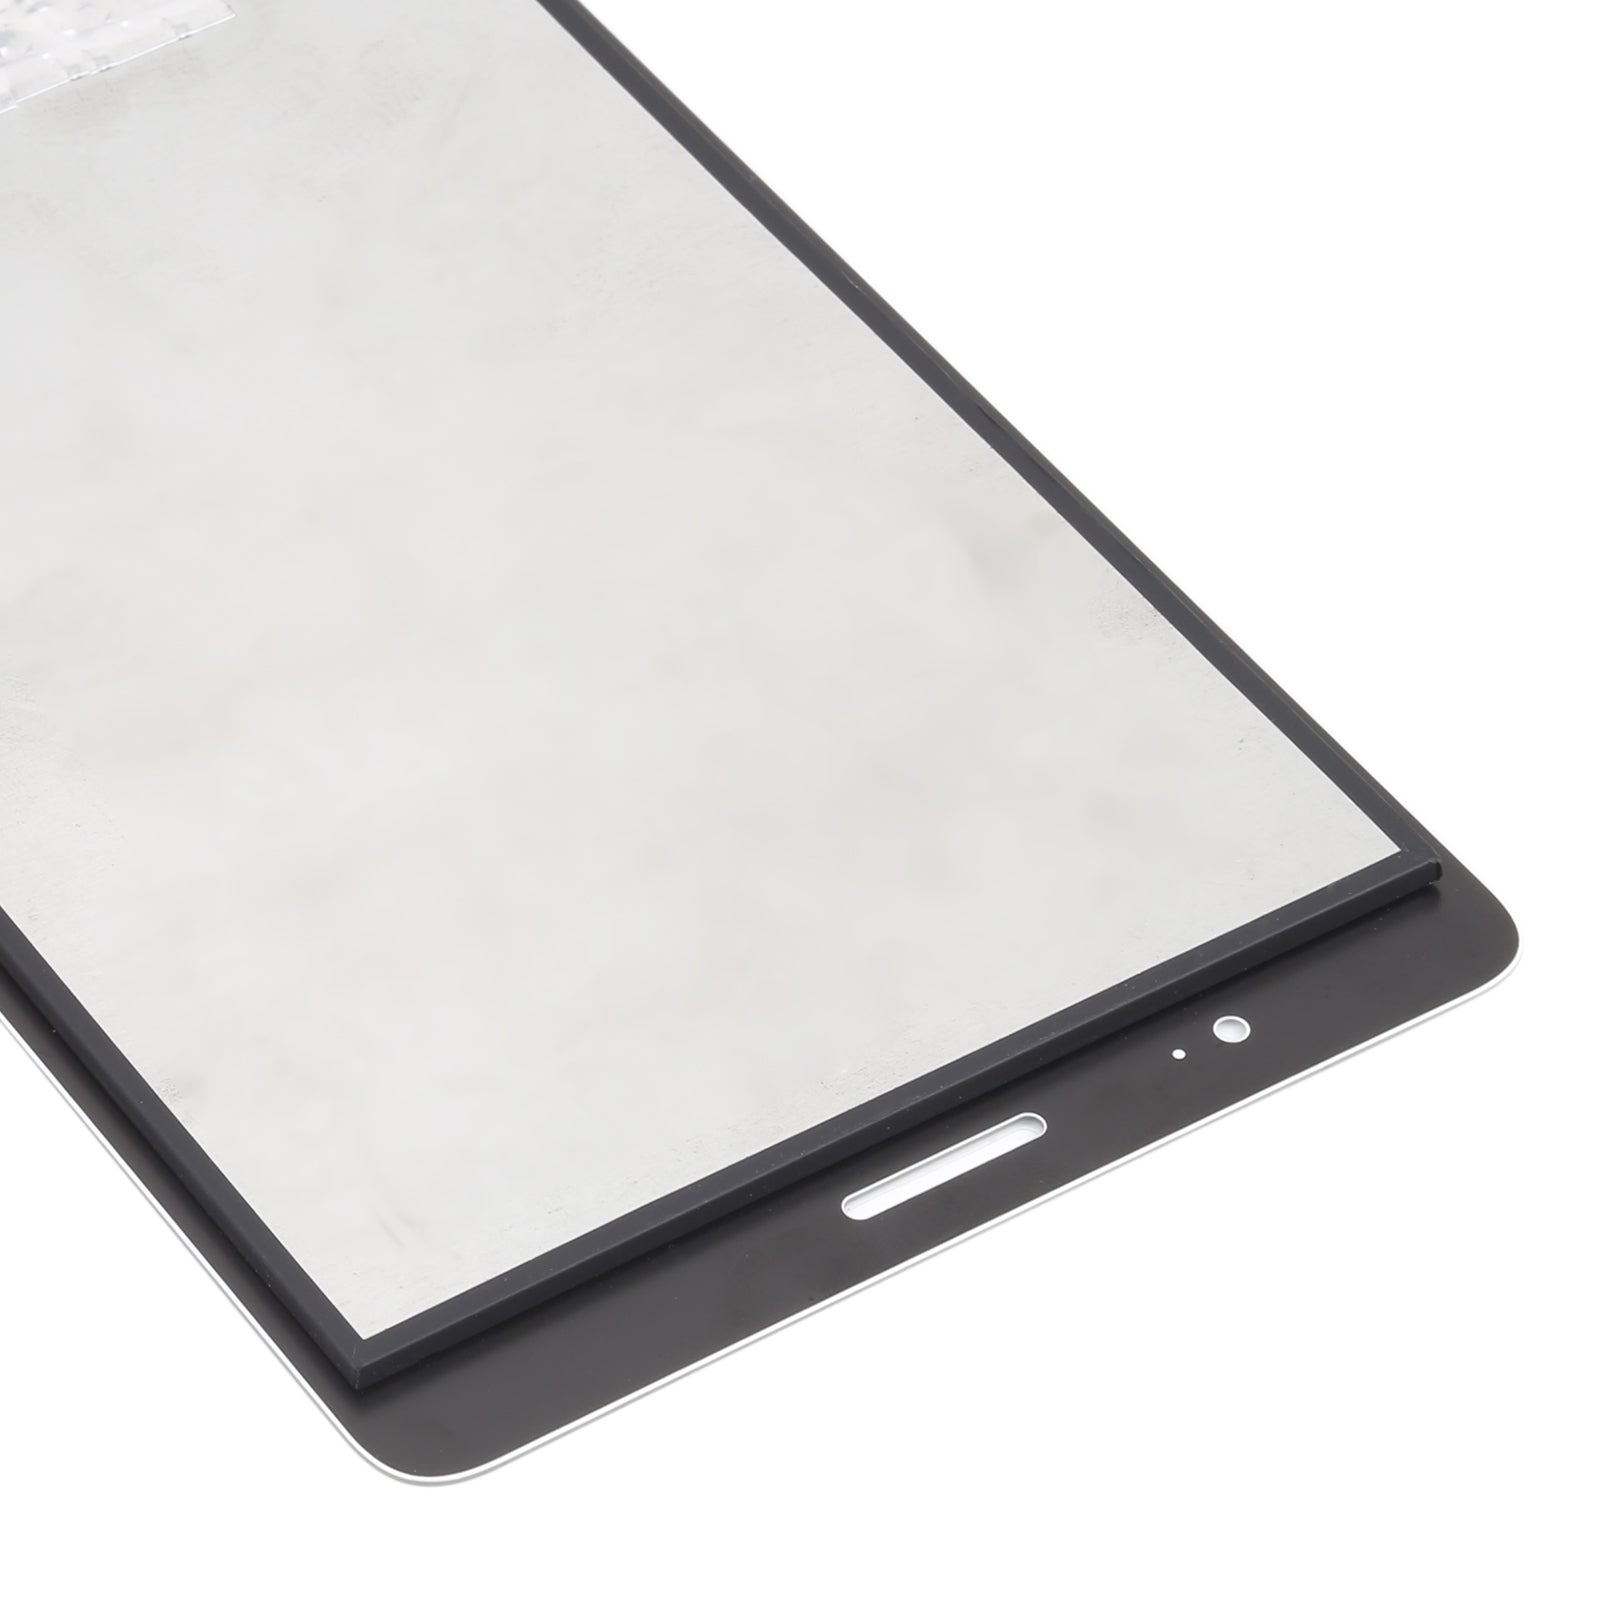 Pantalla LCD + Tactil Digitalizador Huawei MediaPad T3 8.0 KOB-L09 Blanco